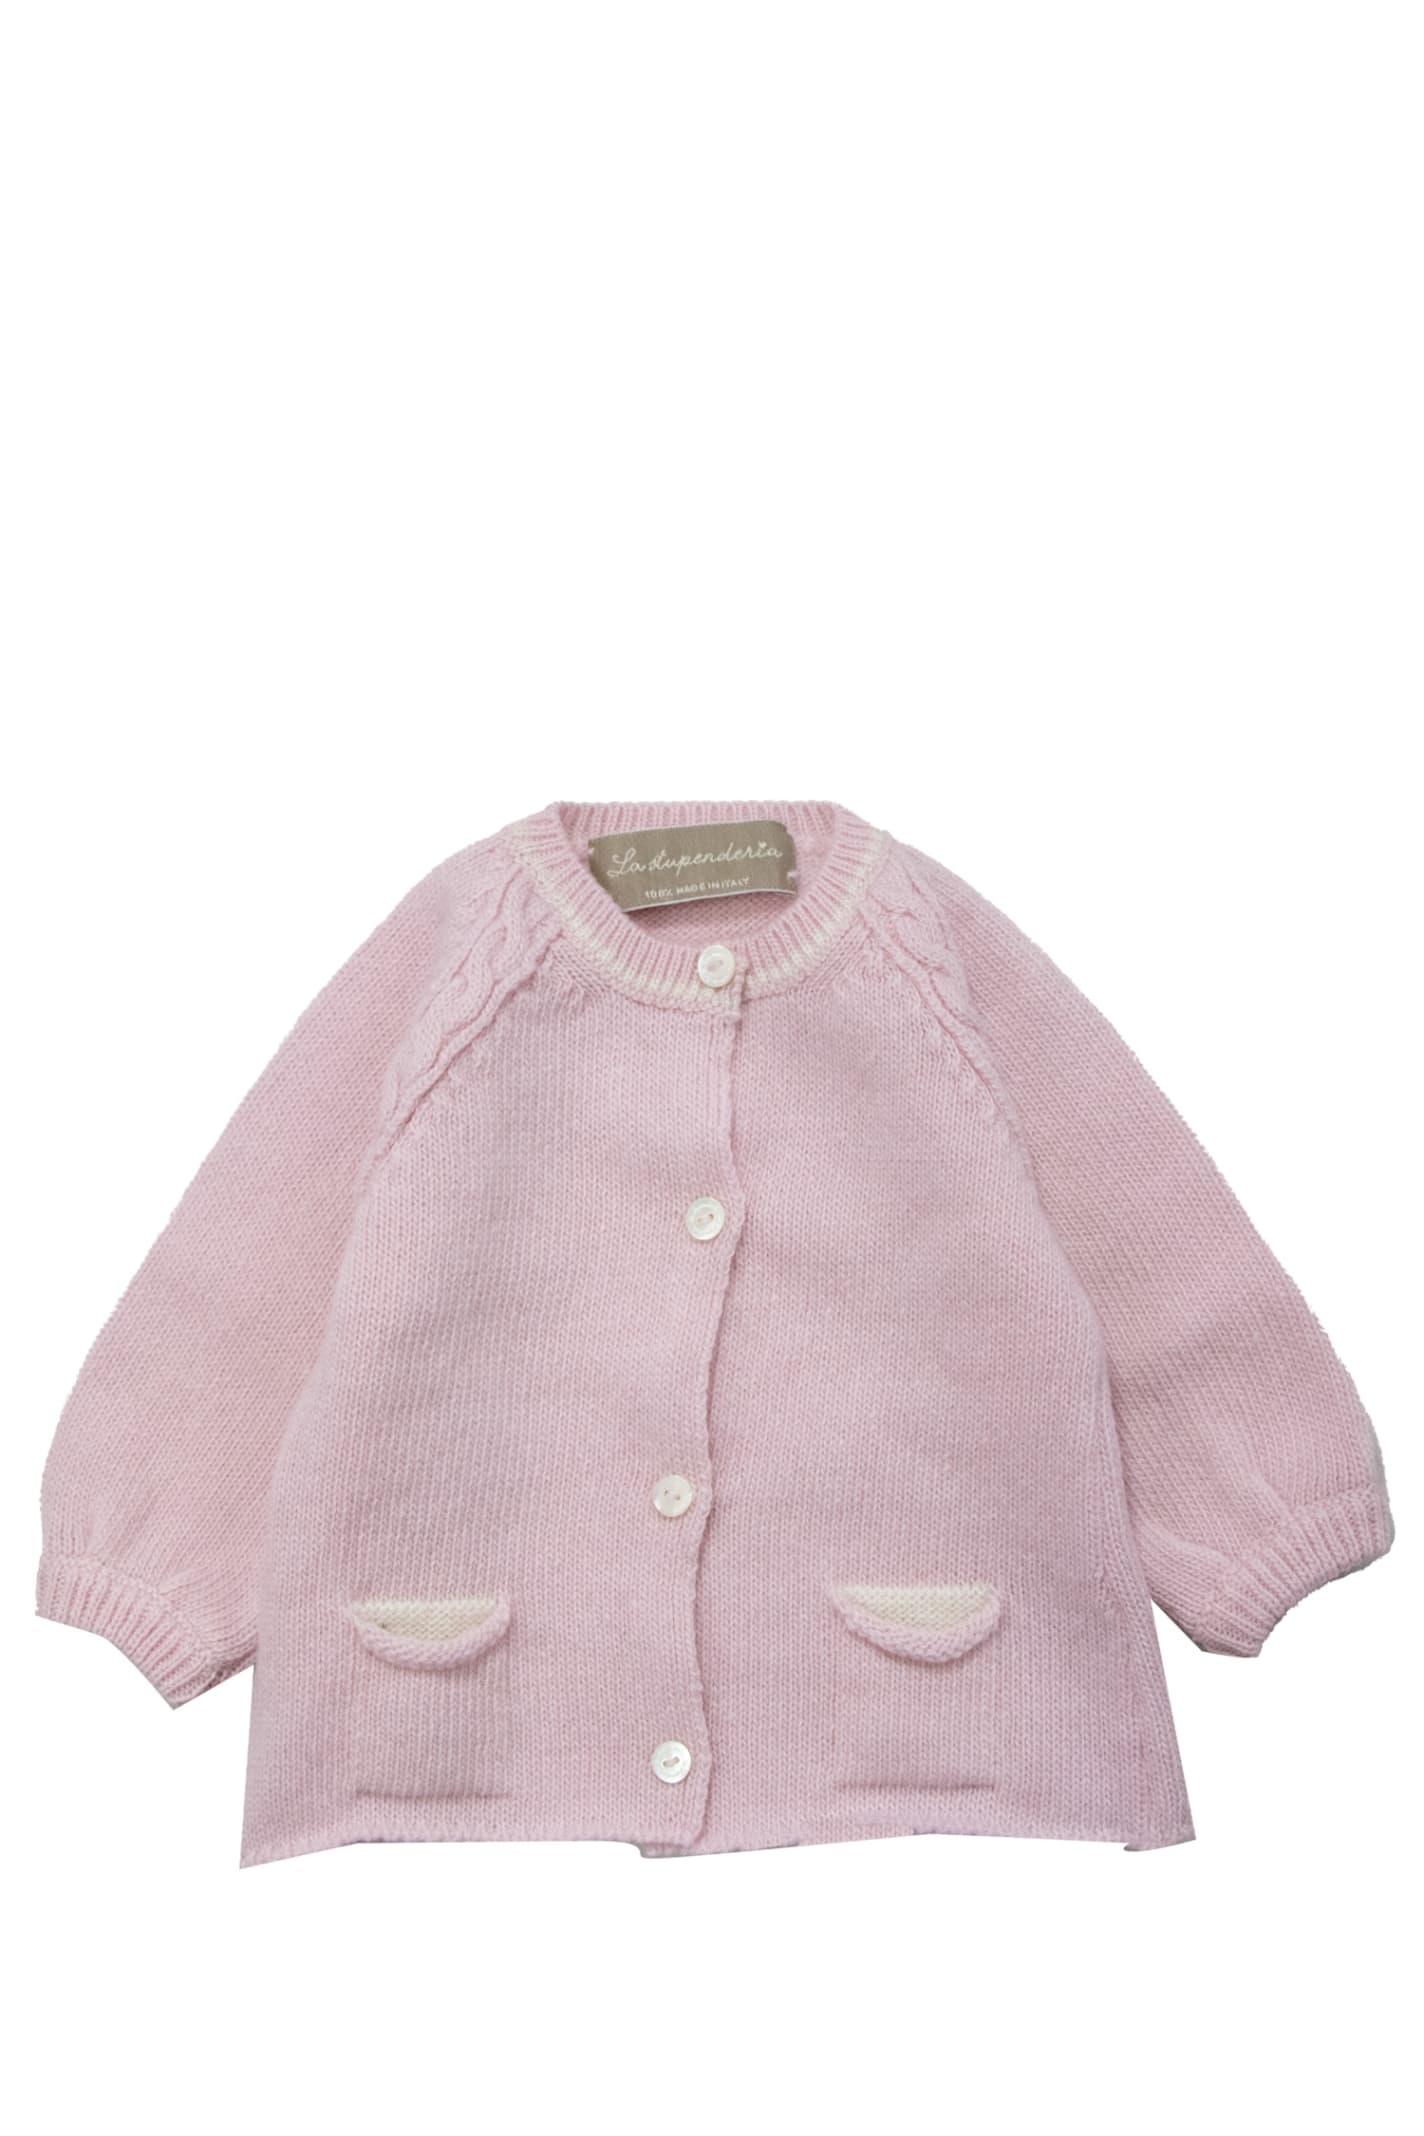 La Stupenderia Babies' Wool Sweater In Rose